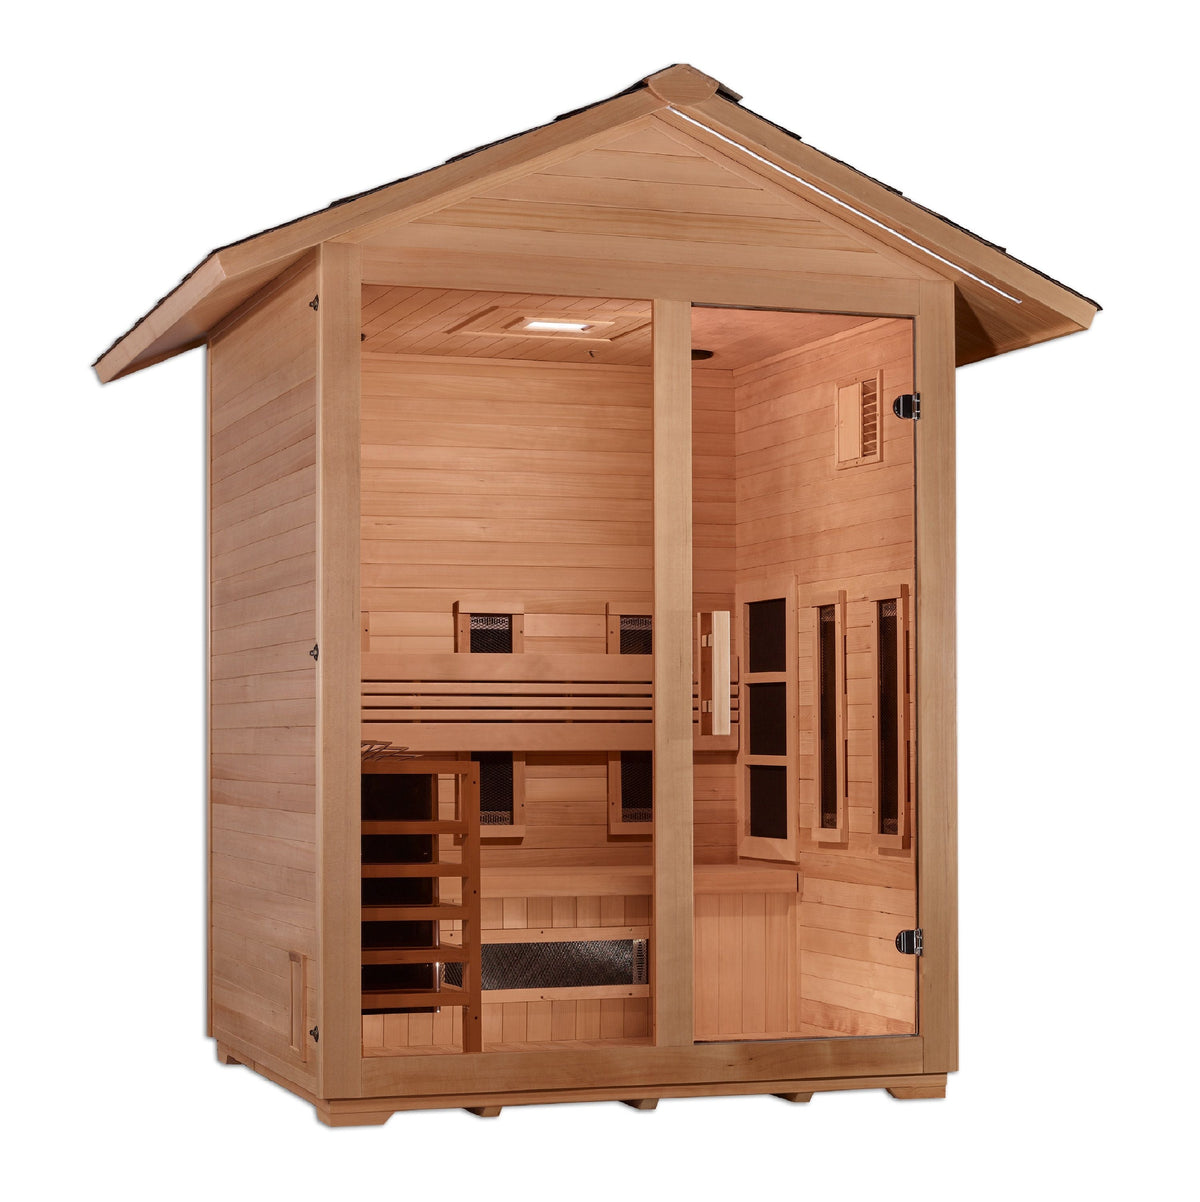 Golden Designs Carinthia 3 Person Hybrid Outdoor Sauna - Canadian Hemlock